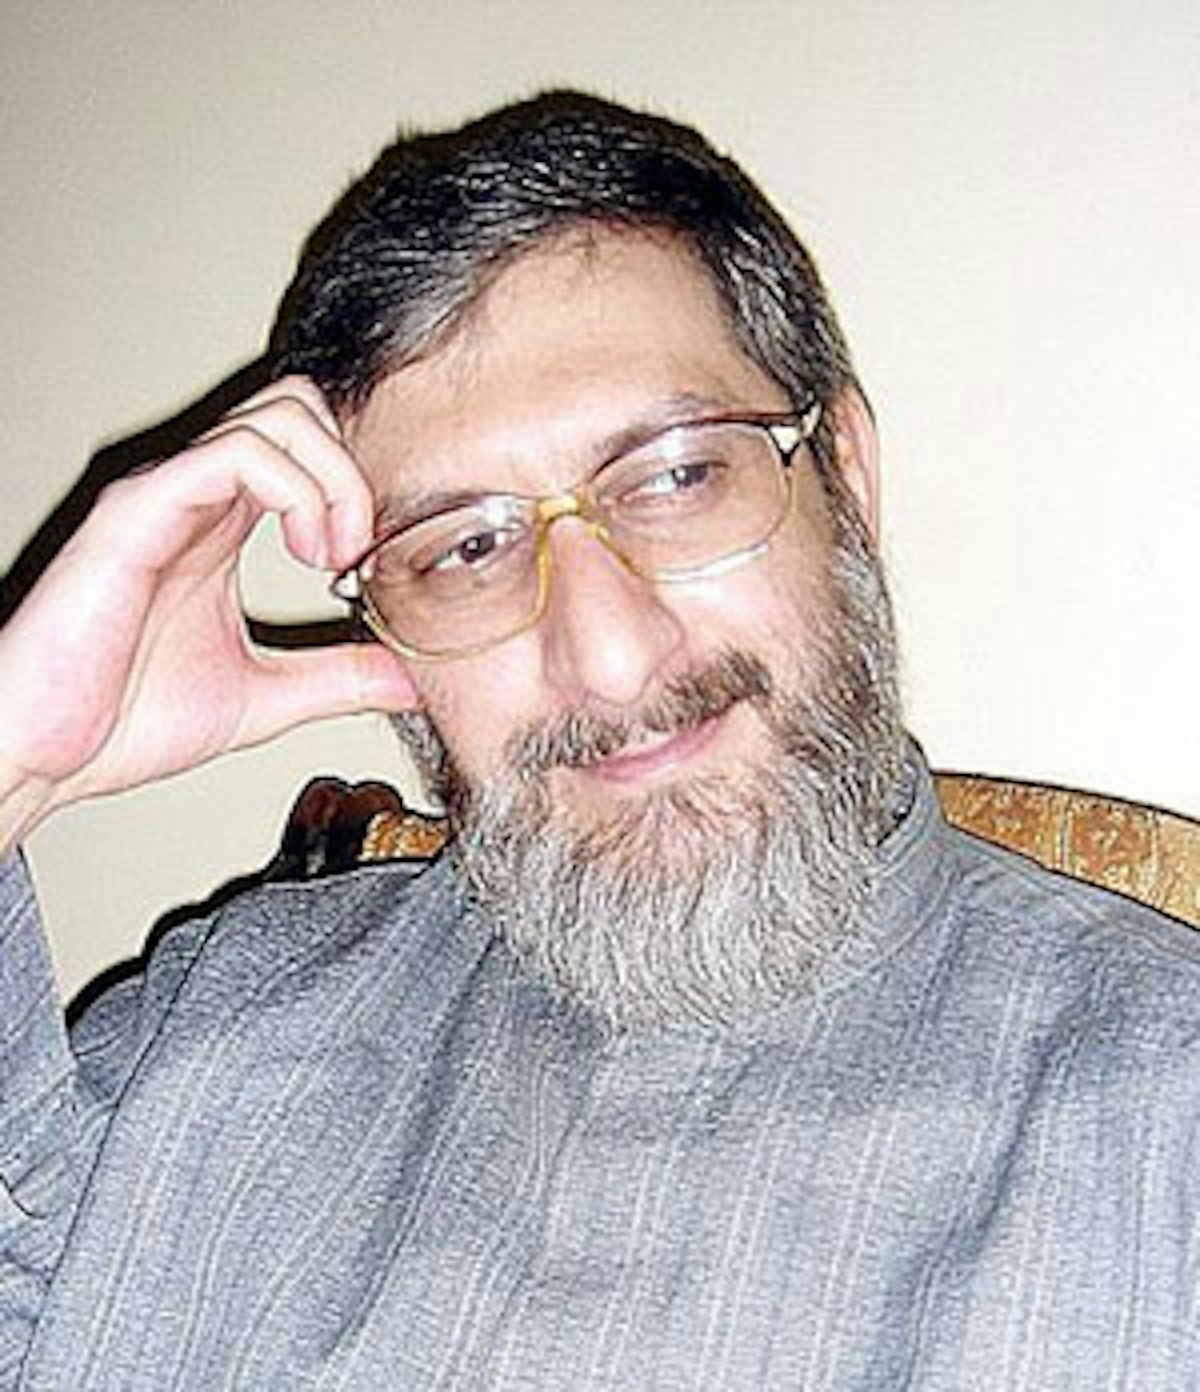 Ayatollah Abdol-Hamid Masoumi-Tehrani